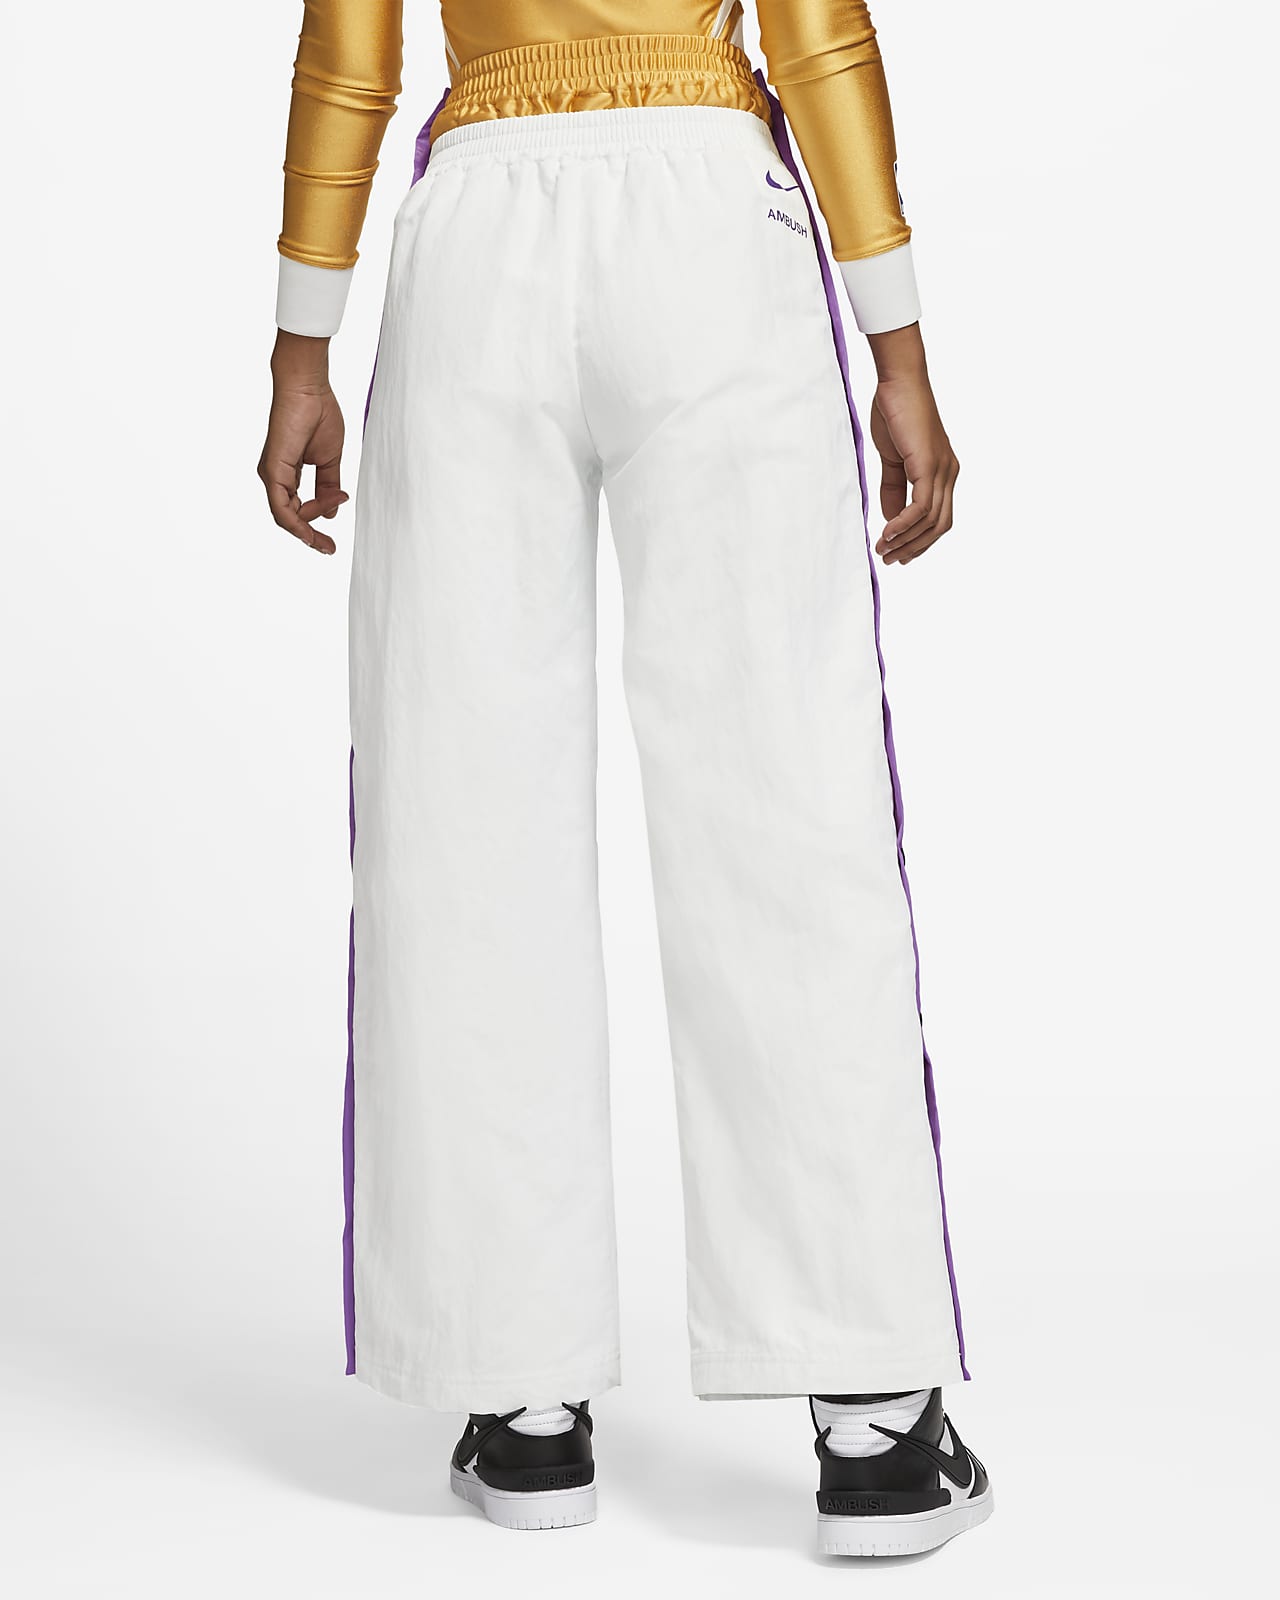 Adidas x Eric Emanuel Men Tearaway Pants beige cream white maroon matte  yellow gold